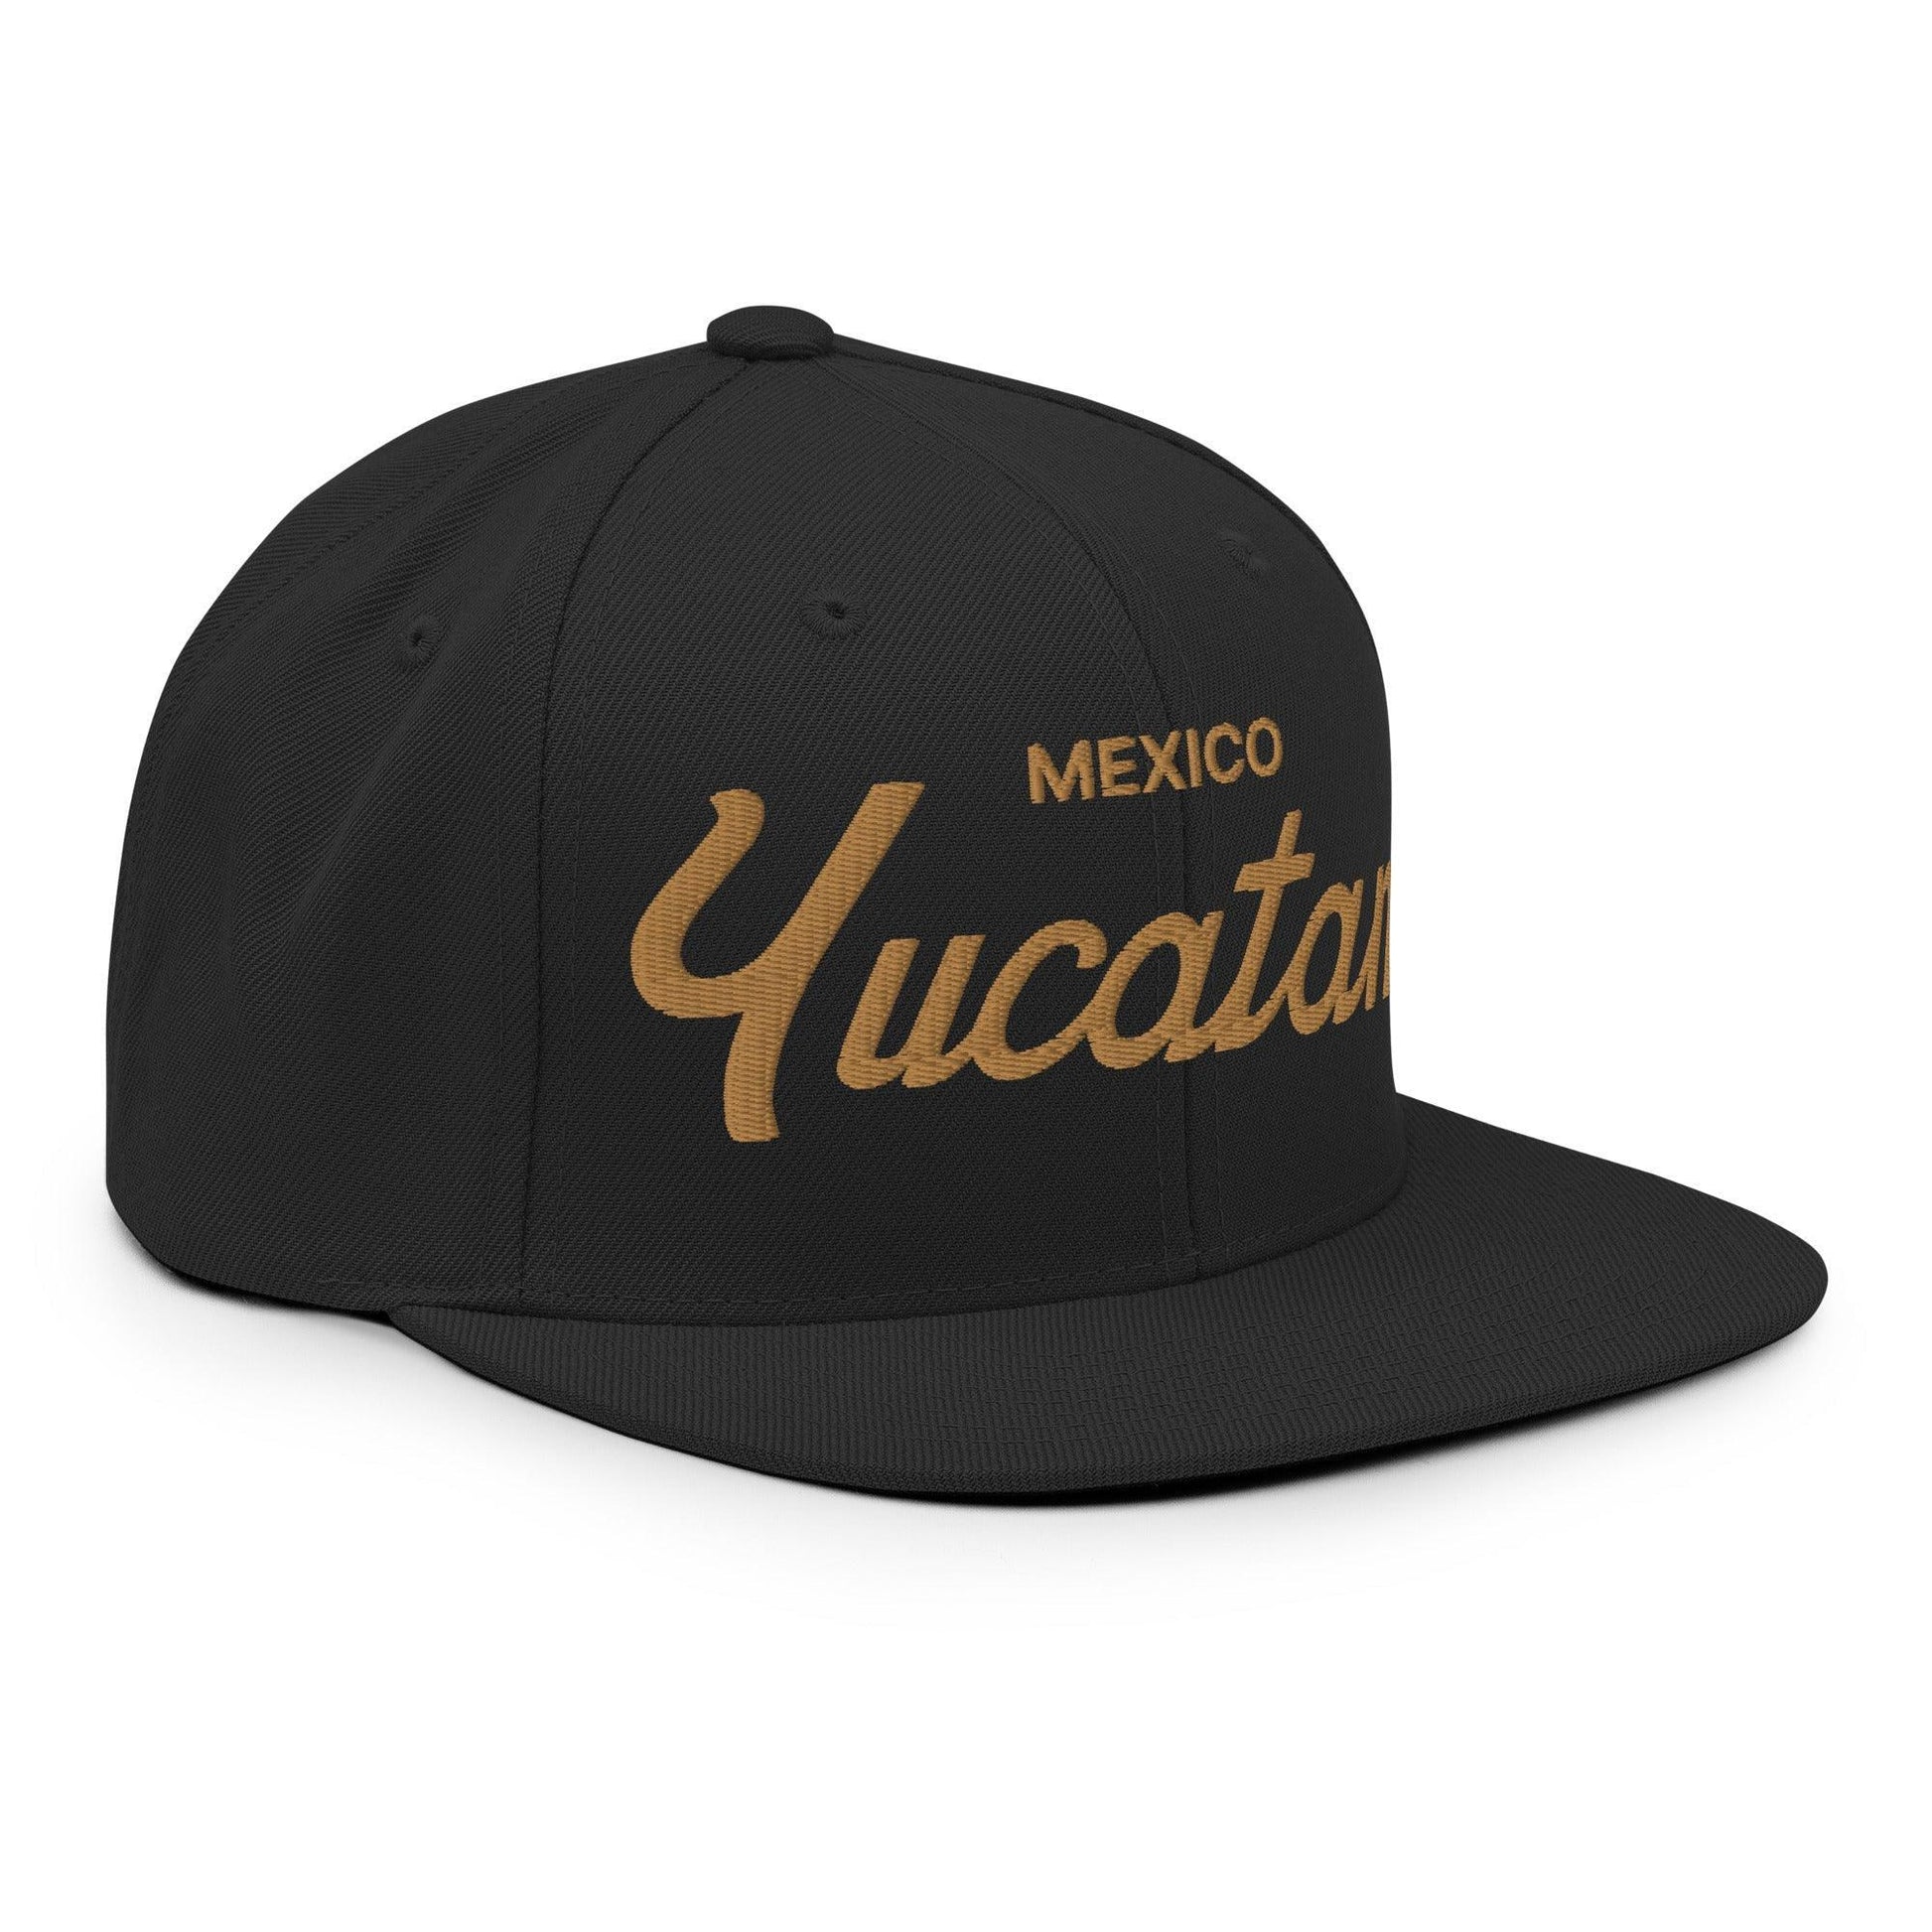 Yucatan Mexico Gold Vintage Sports Script Snapback Hat Black